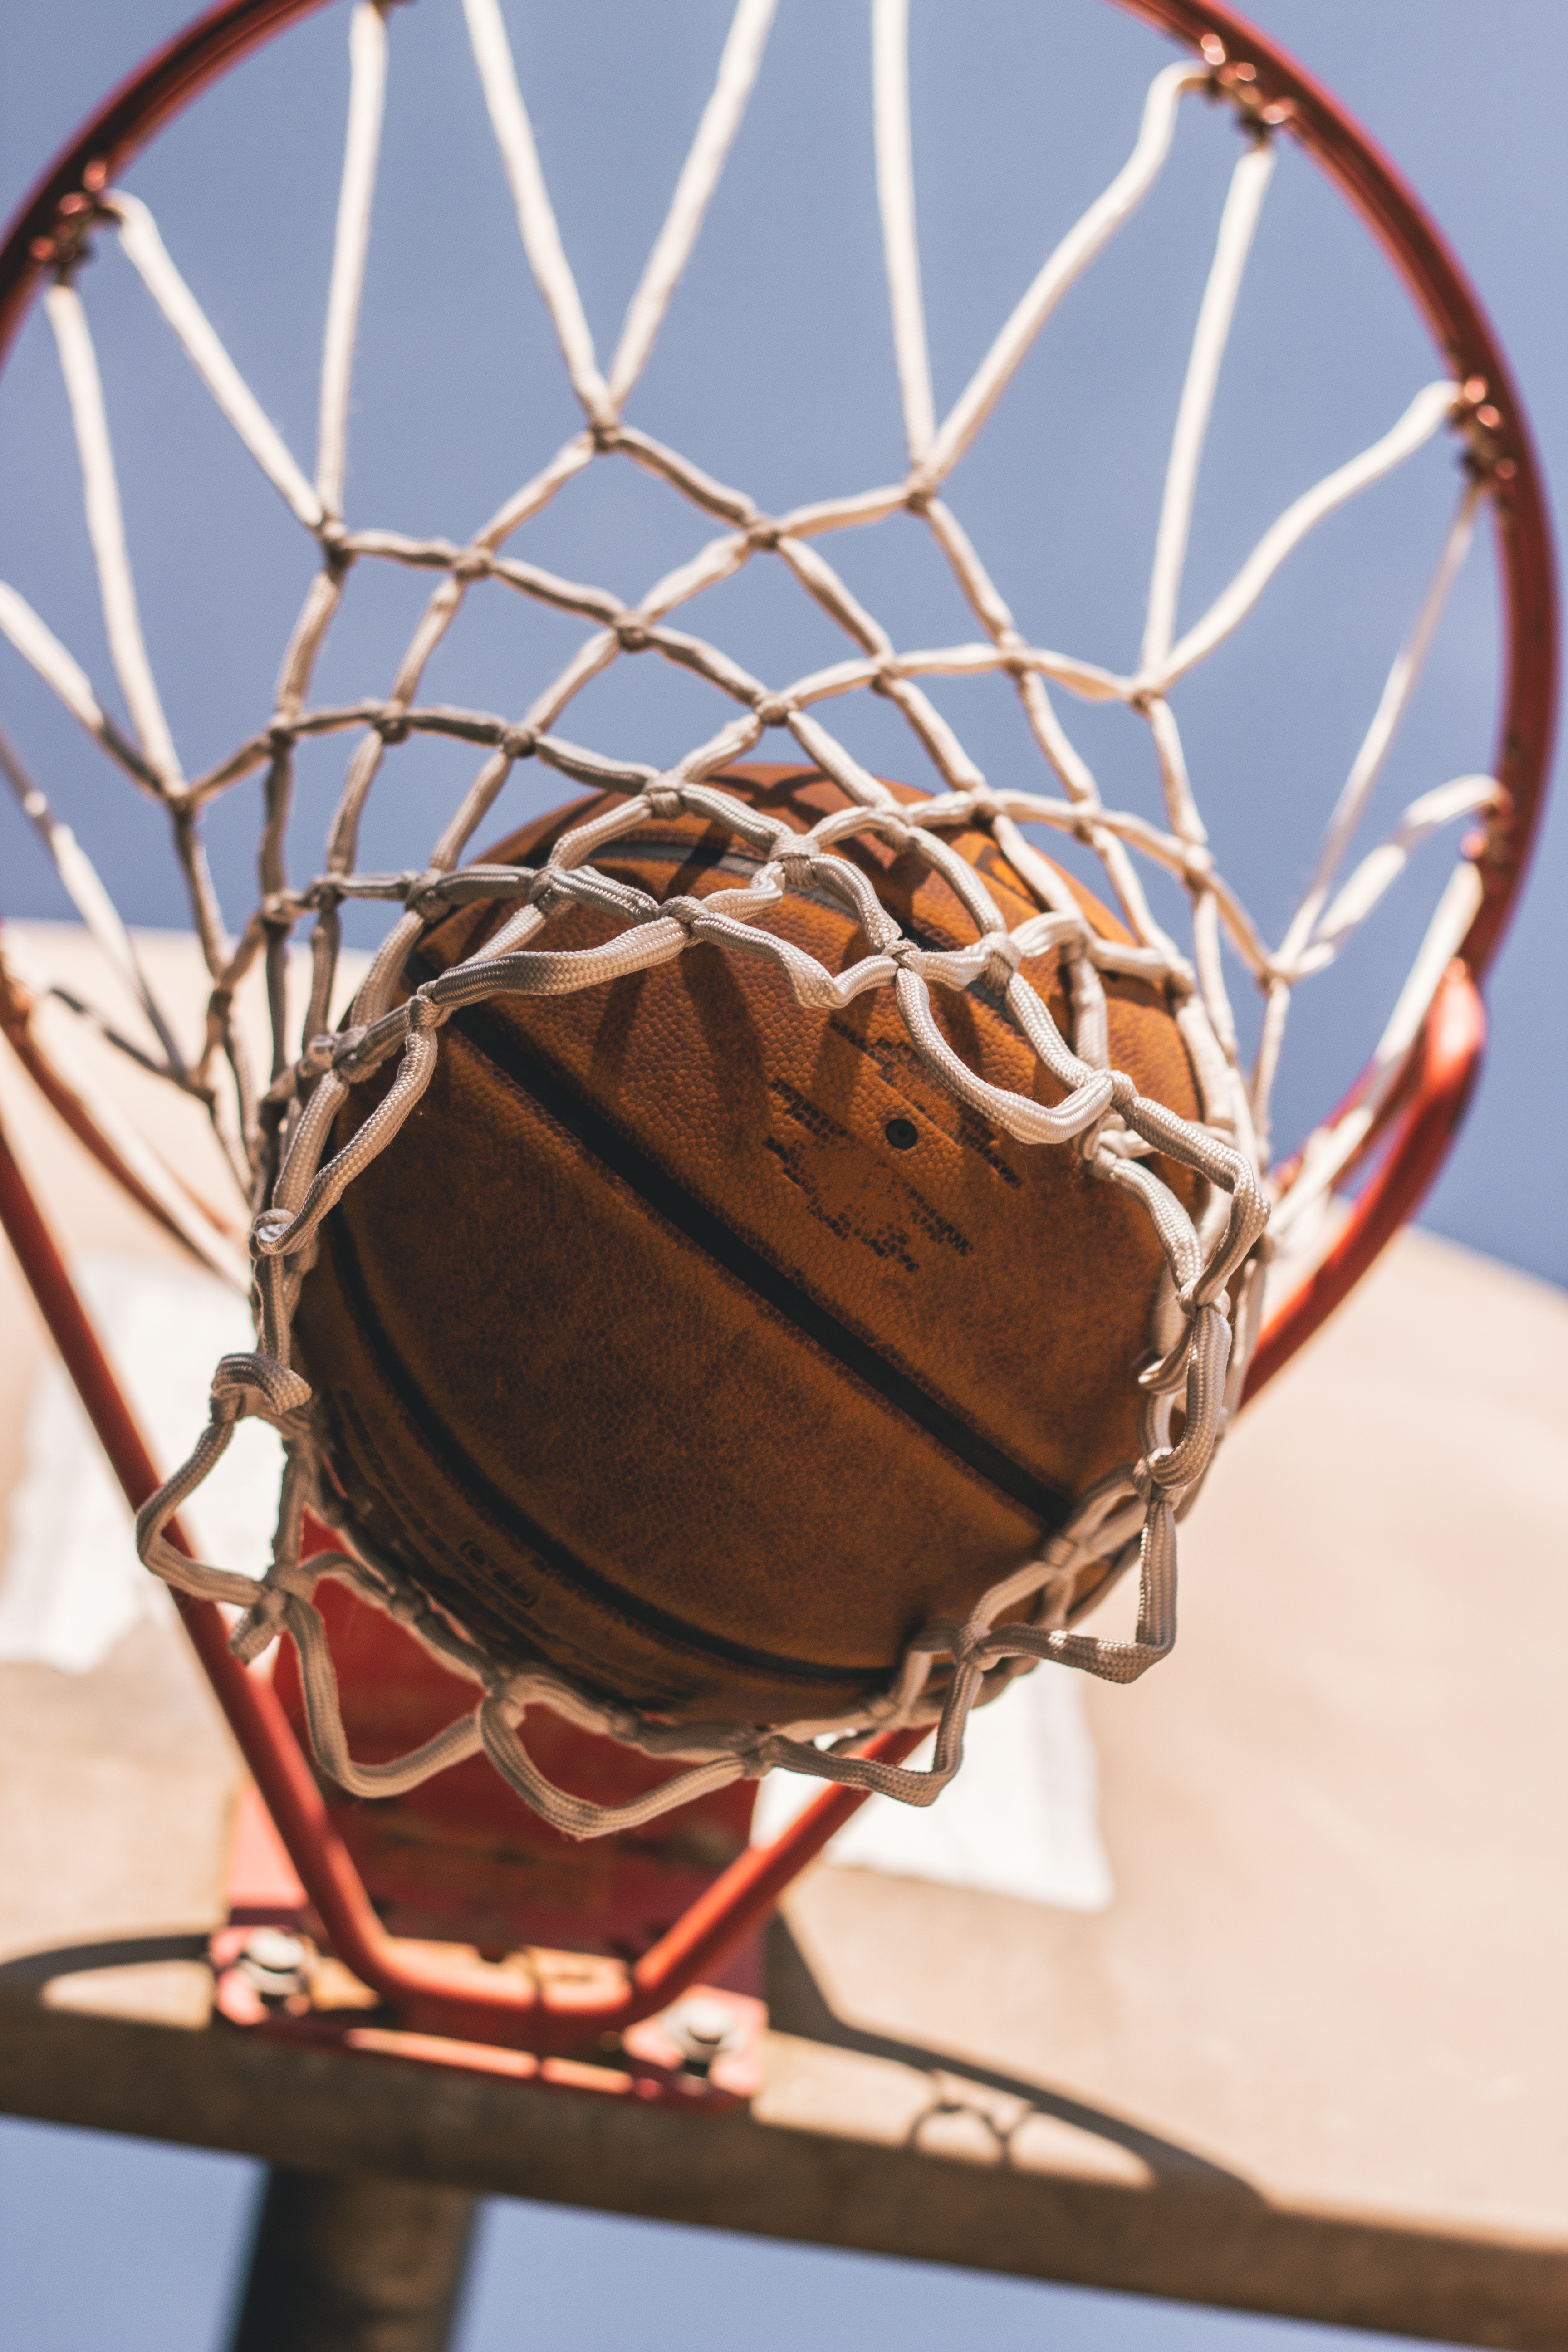 basketball, basketball grid, sports, ball, basketball net